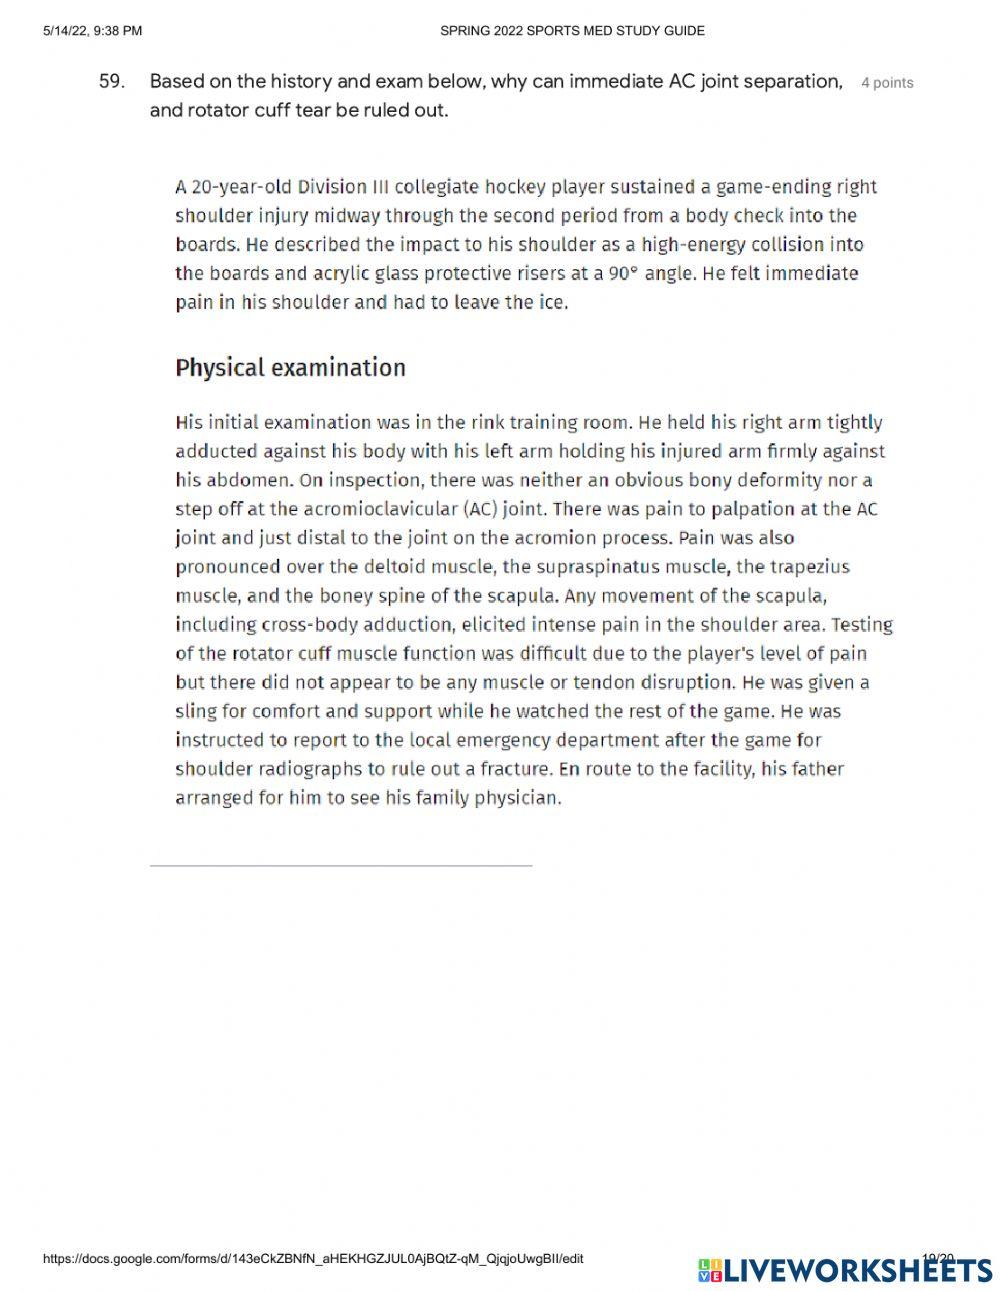 Sports medicine study guide part 2